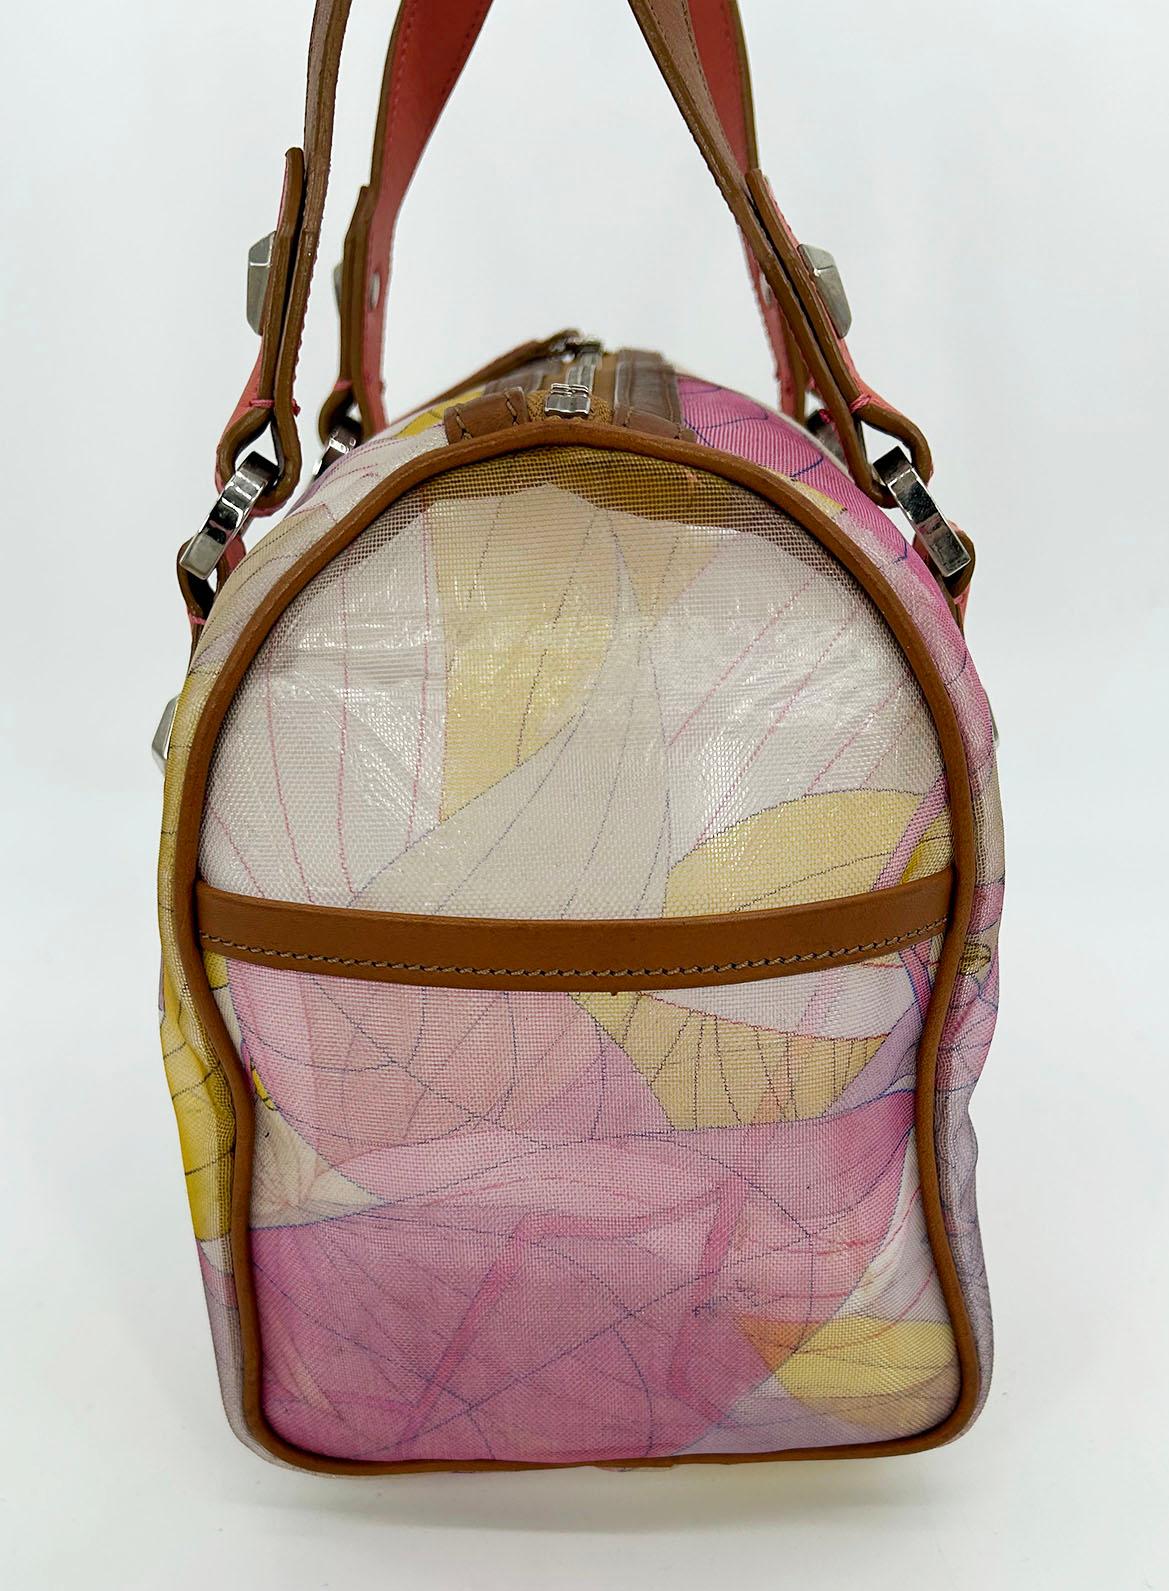 Emilio Pucci Mesh Print Speedy Handbag In Good Condition For Sale In Philadelphia, PA